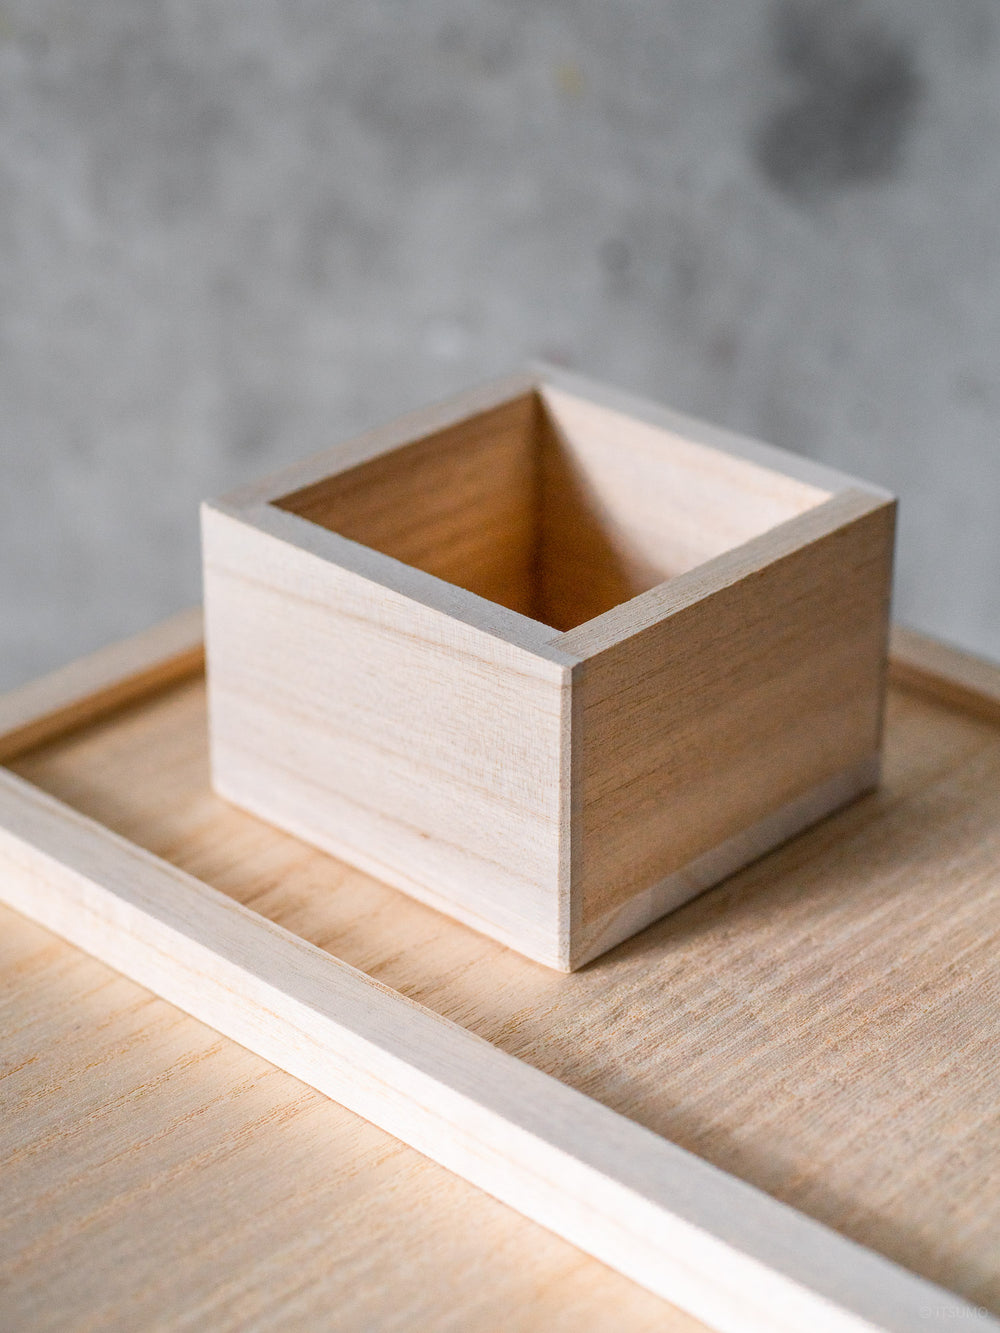 Azmaya rice scoop on top of a Japanese rice storage box